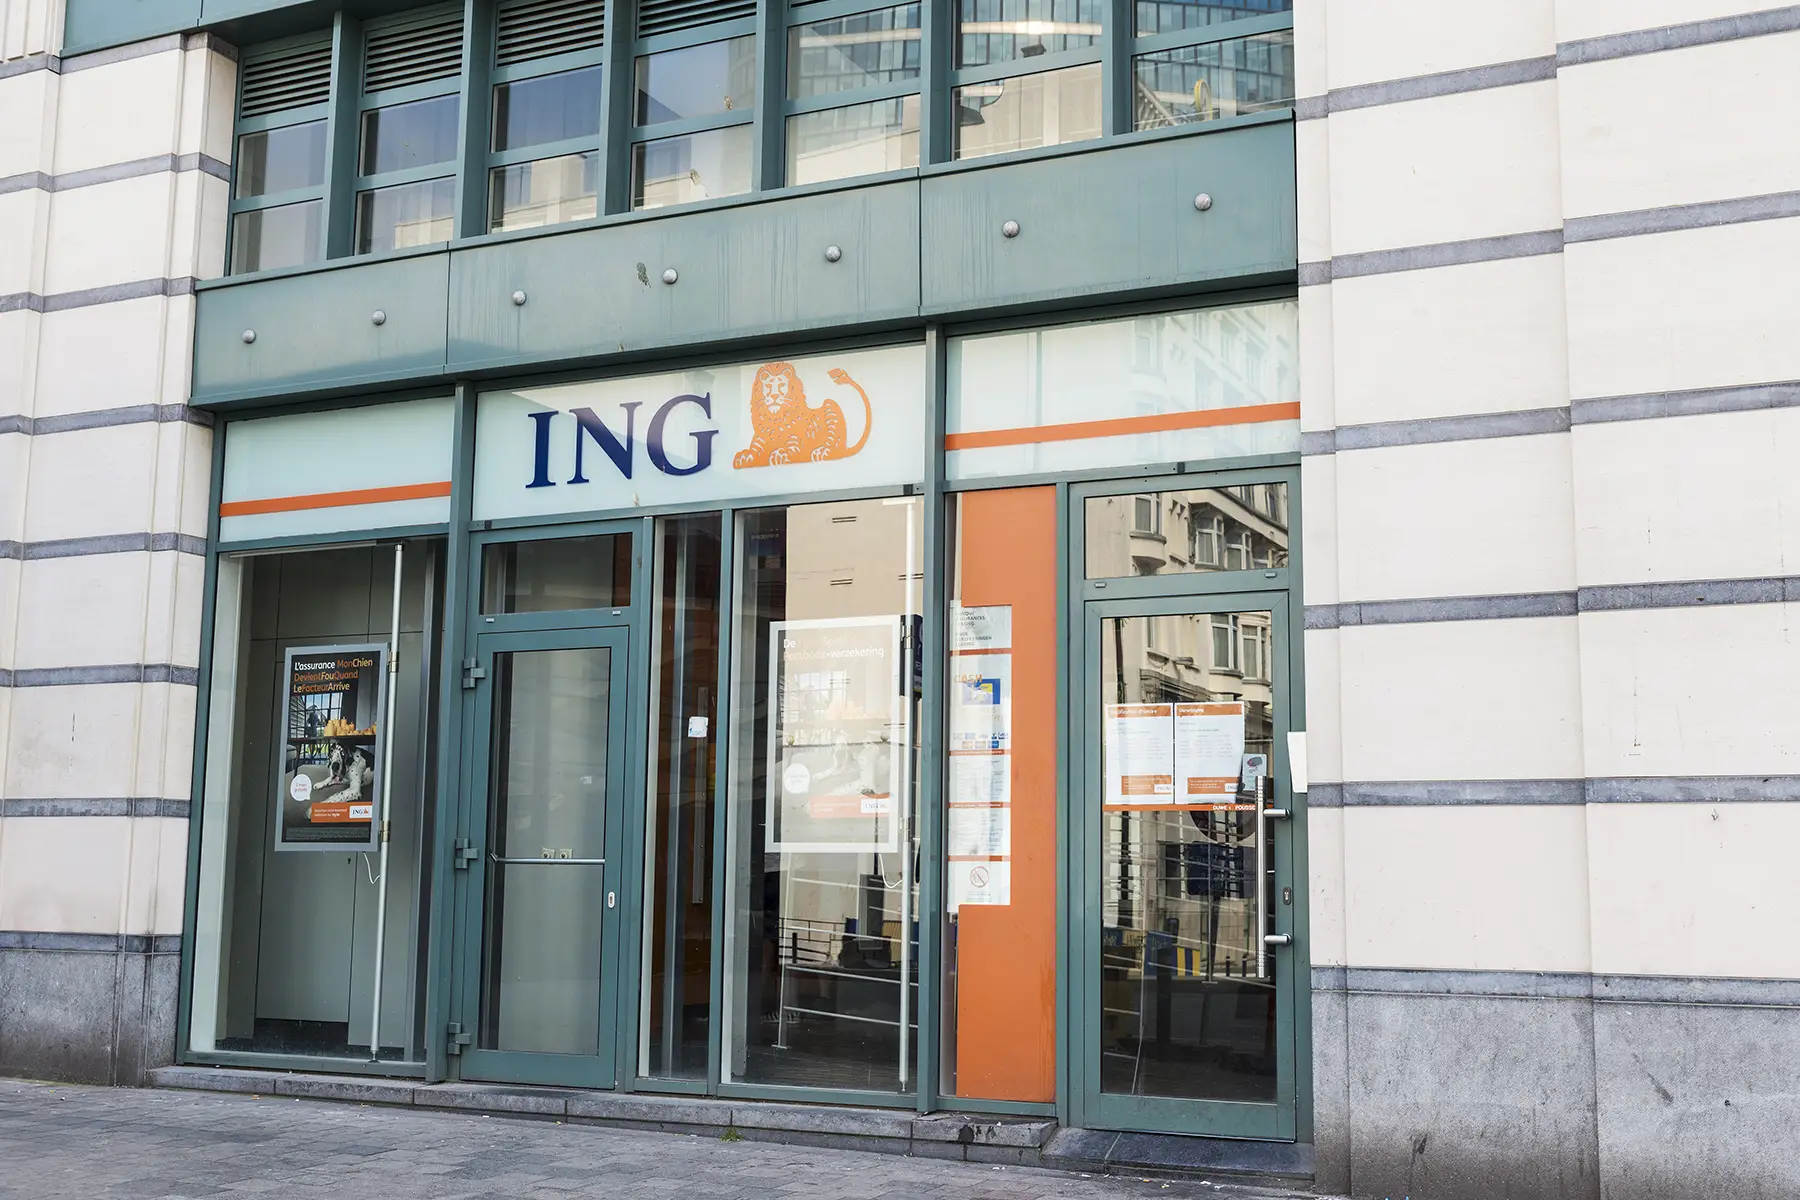 An ING bank branch in Brussels, Belgium